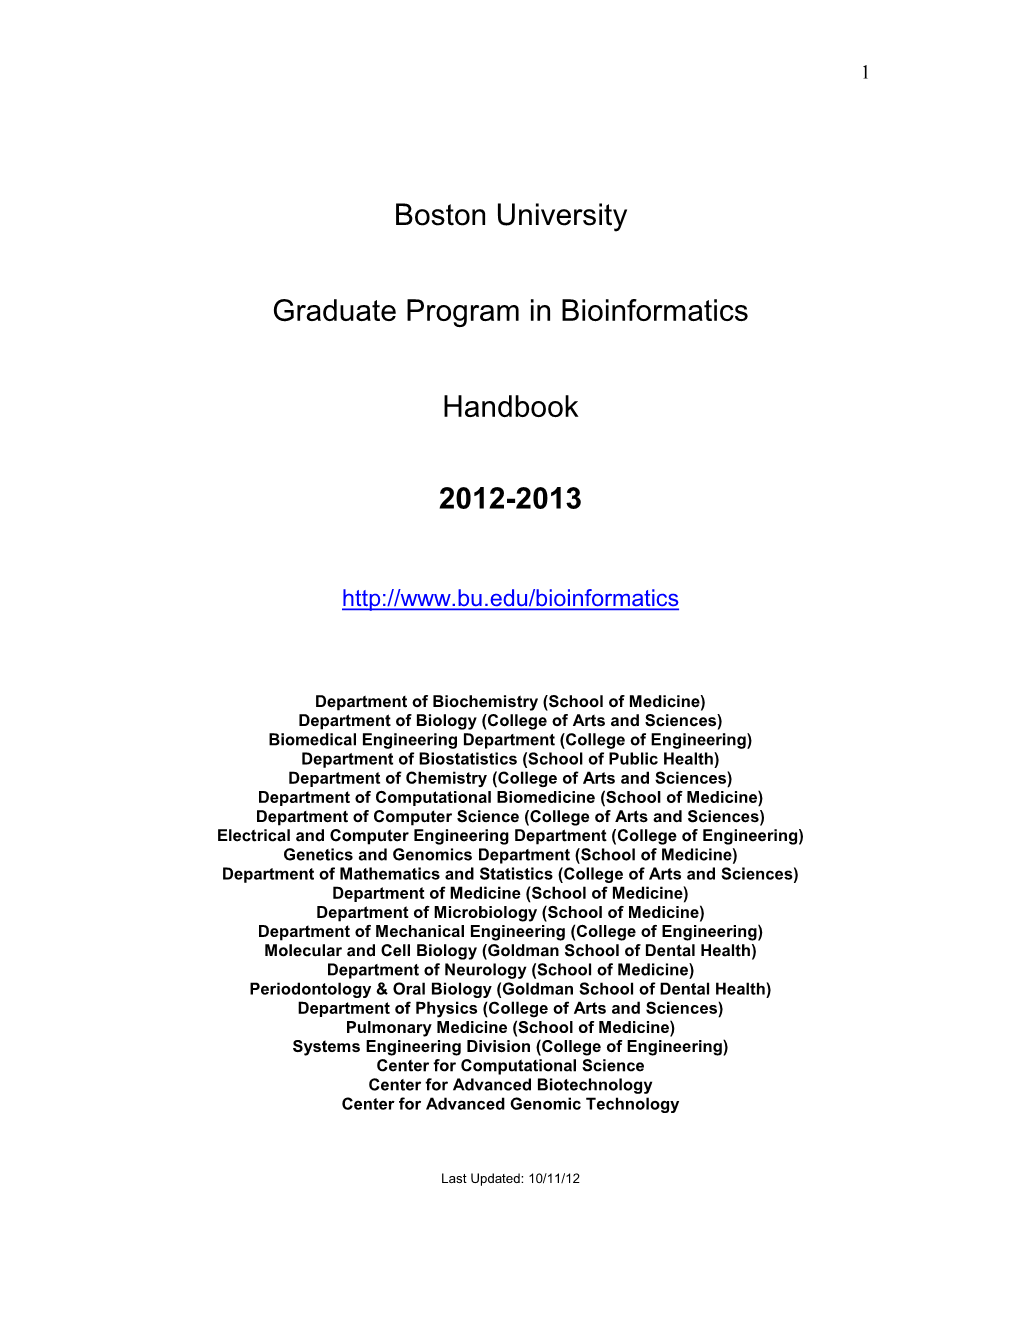 Boston University Graduate Program in Bioinformatics Handbook 2012